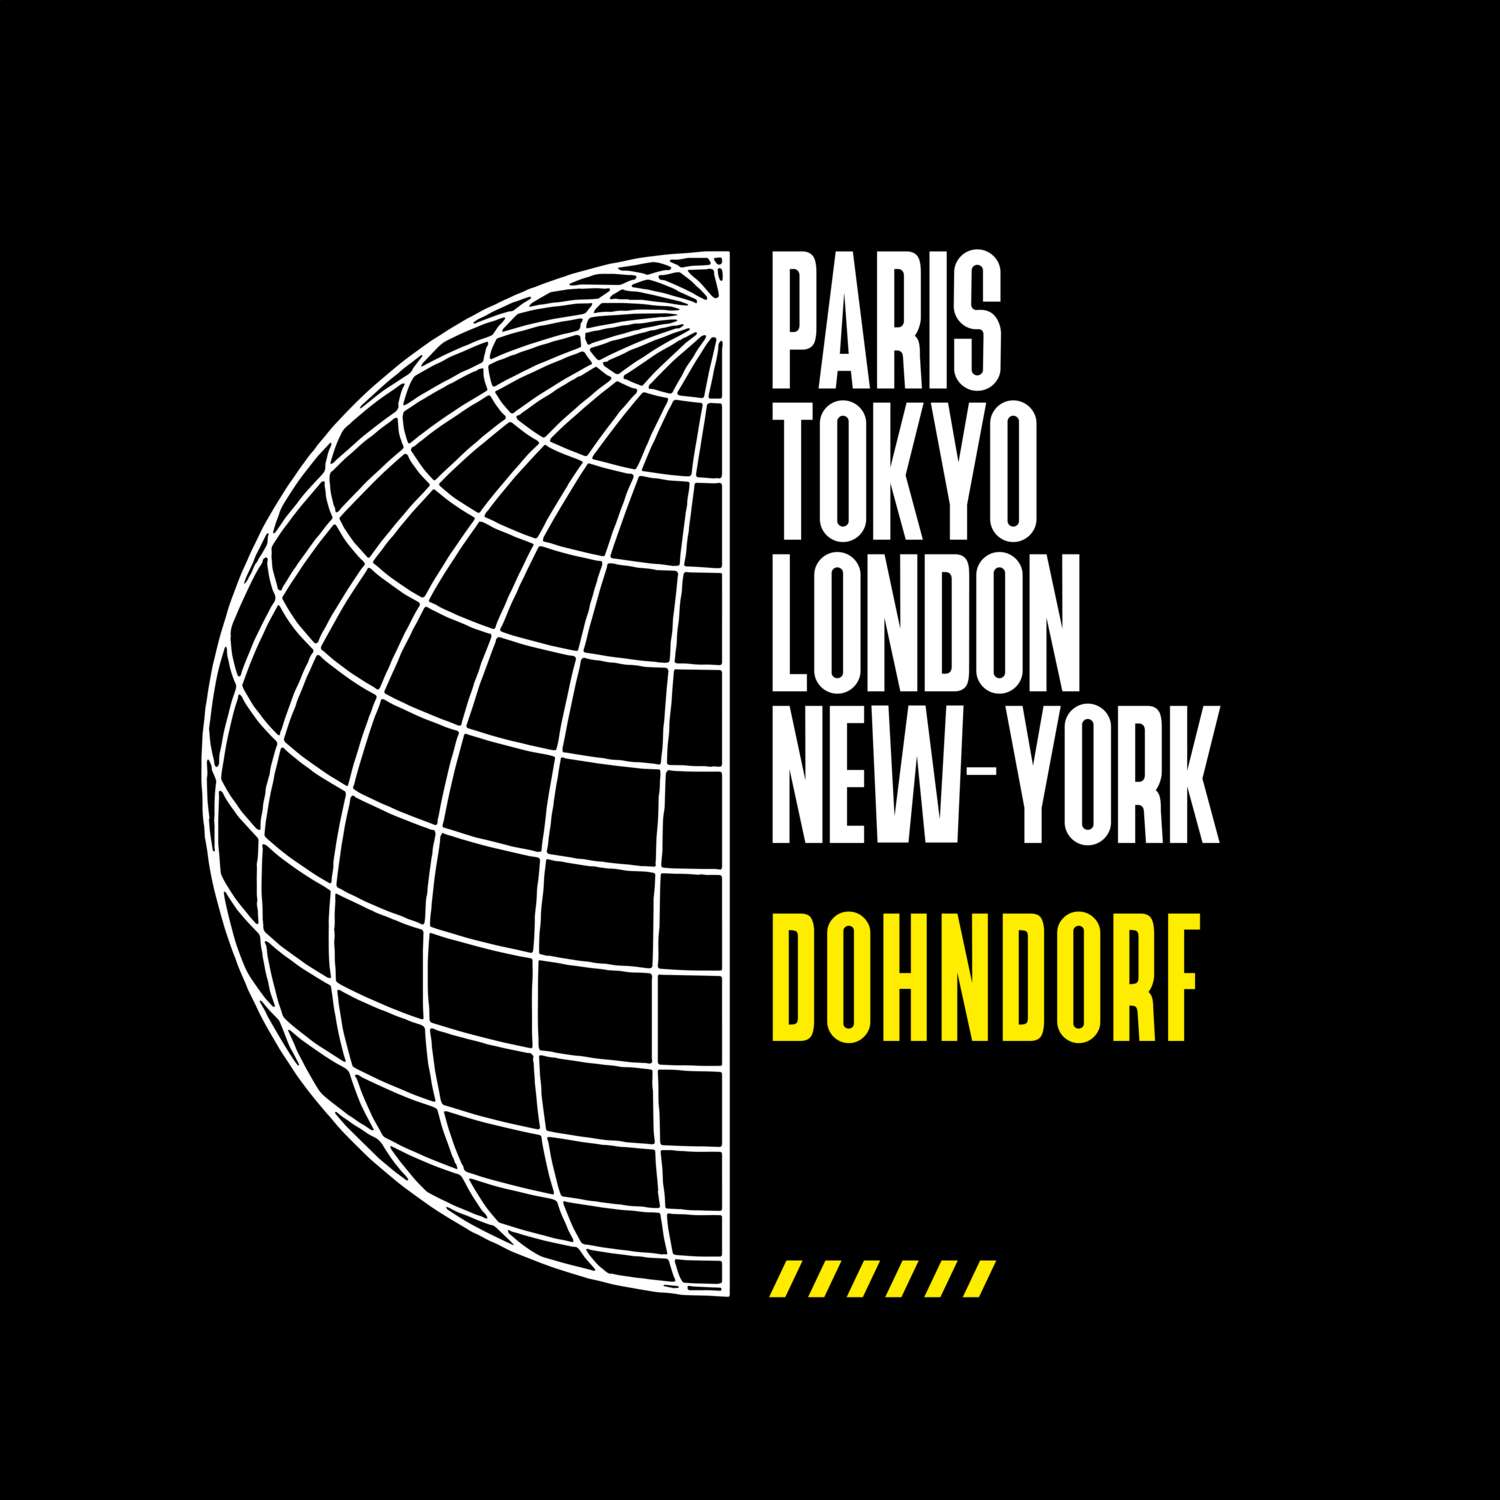 Dohndorf T-Shirt »Paris Tokyo London«